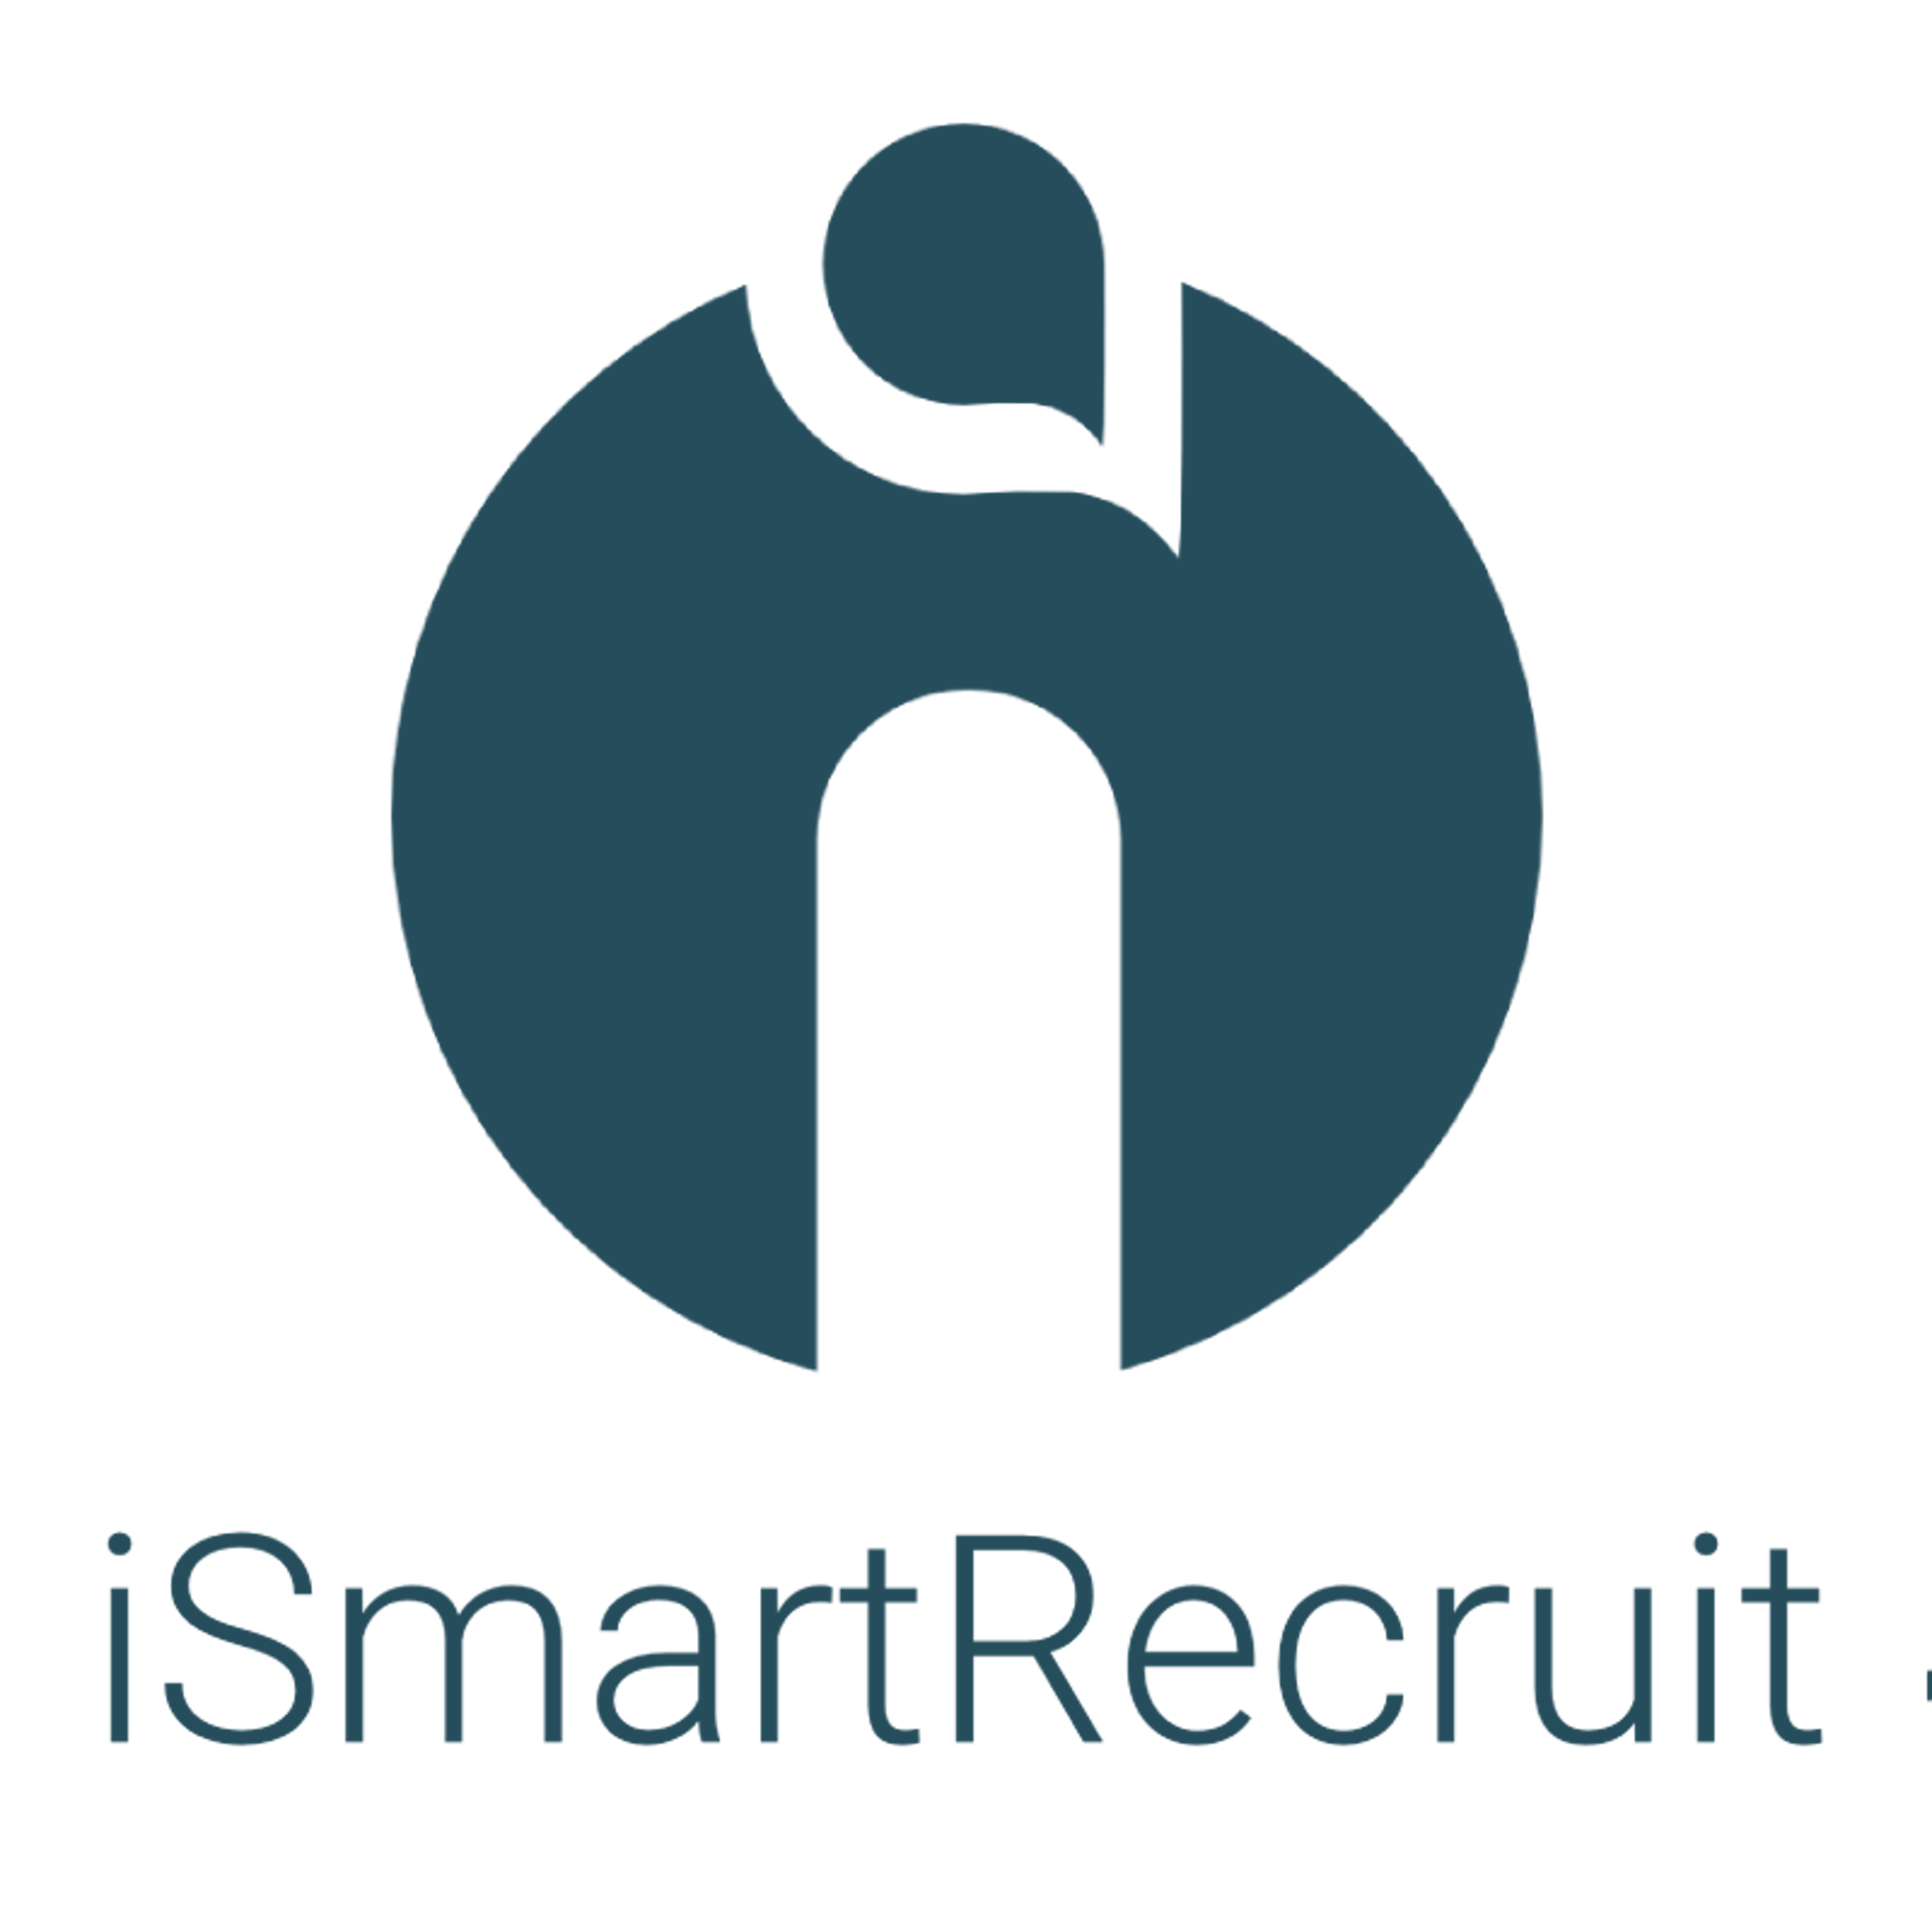 iSmartRecruit Logo